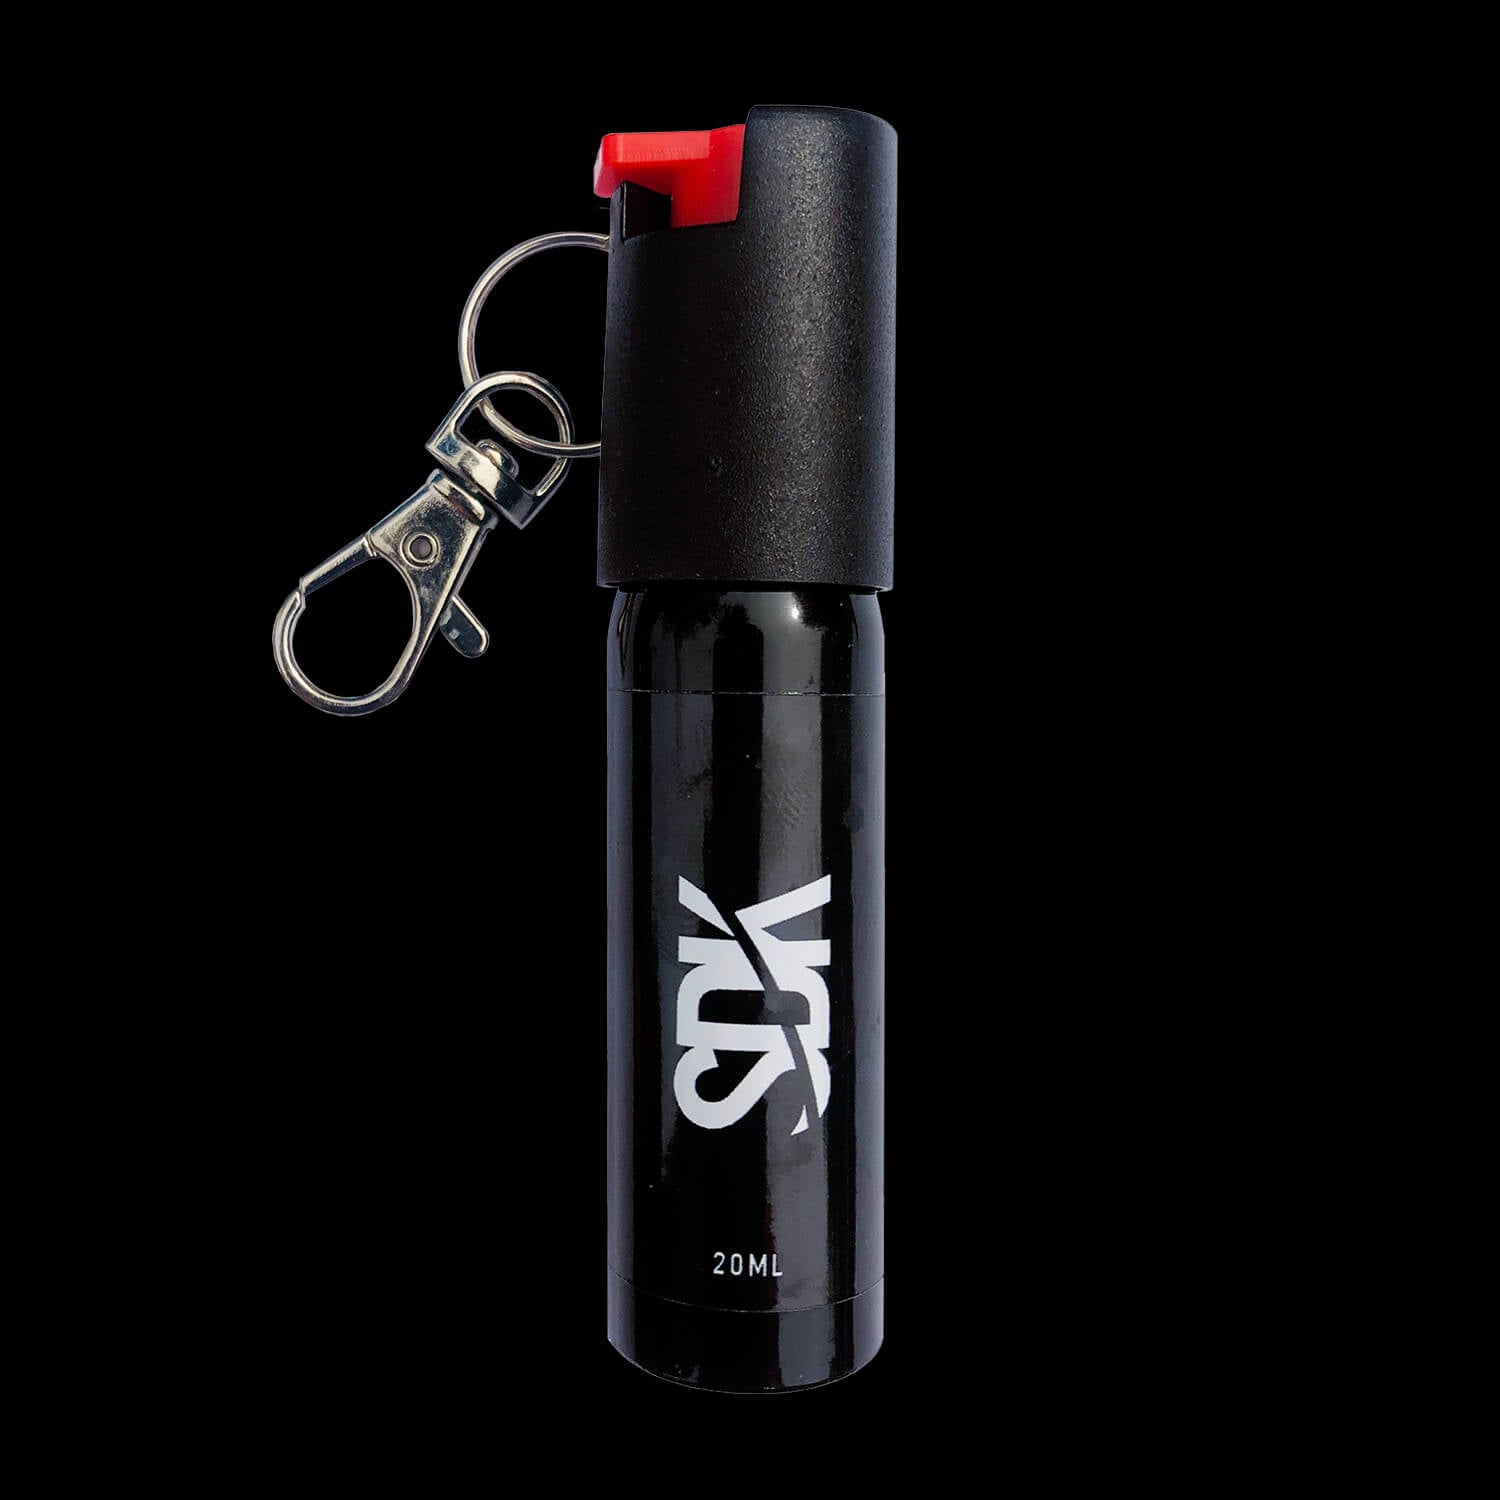 SDK Kit Black Pepper Spray (20ml compact Pepper Spray with keychain attachment)